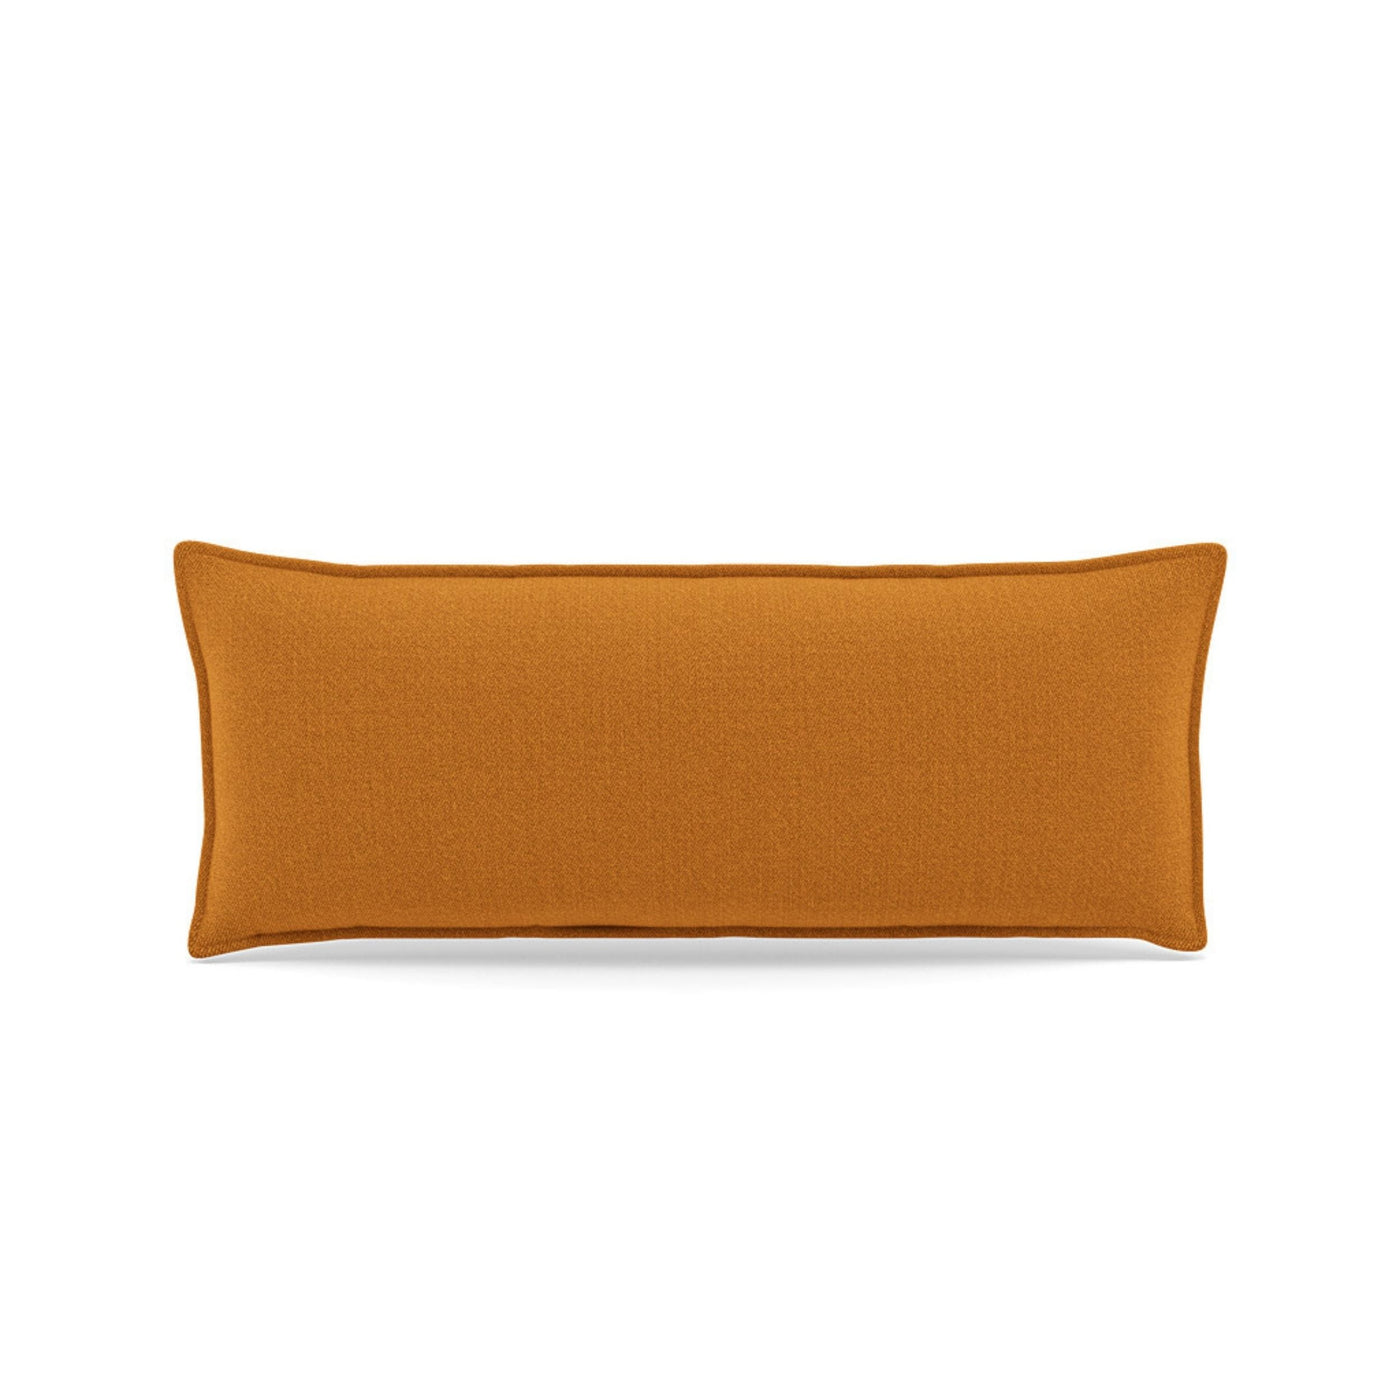 Muuto's In Situ Cushion for the In Situ Modular Sofa series in vidar 472, 70x30cm. Made to order from someday designs. #colour_vidar-472